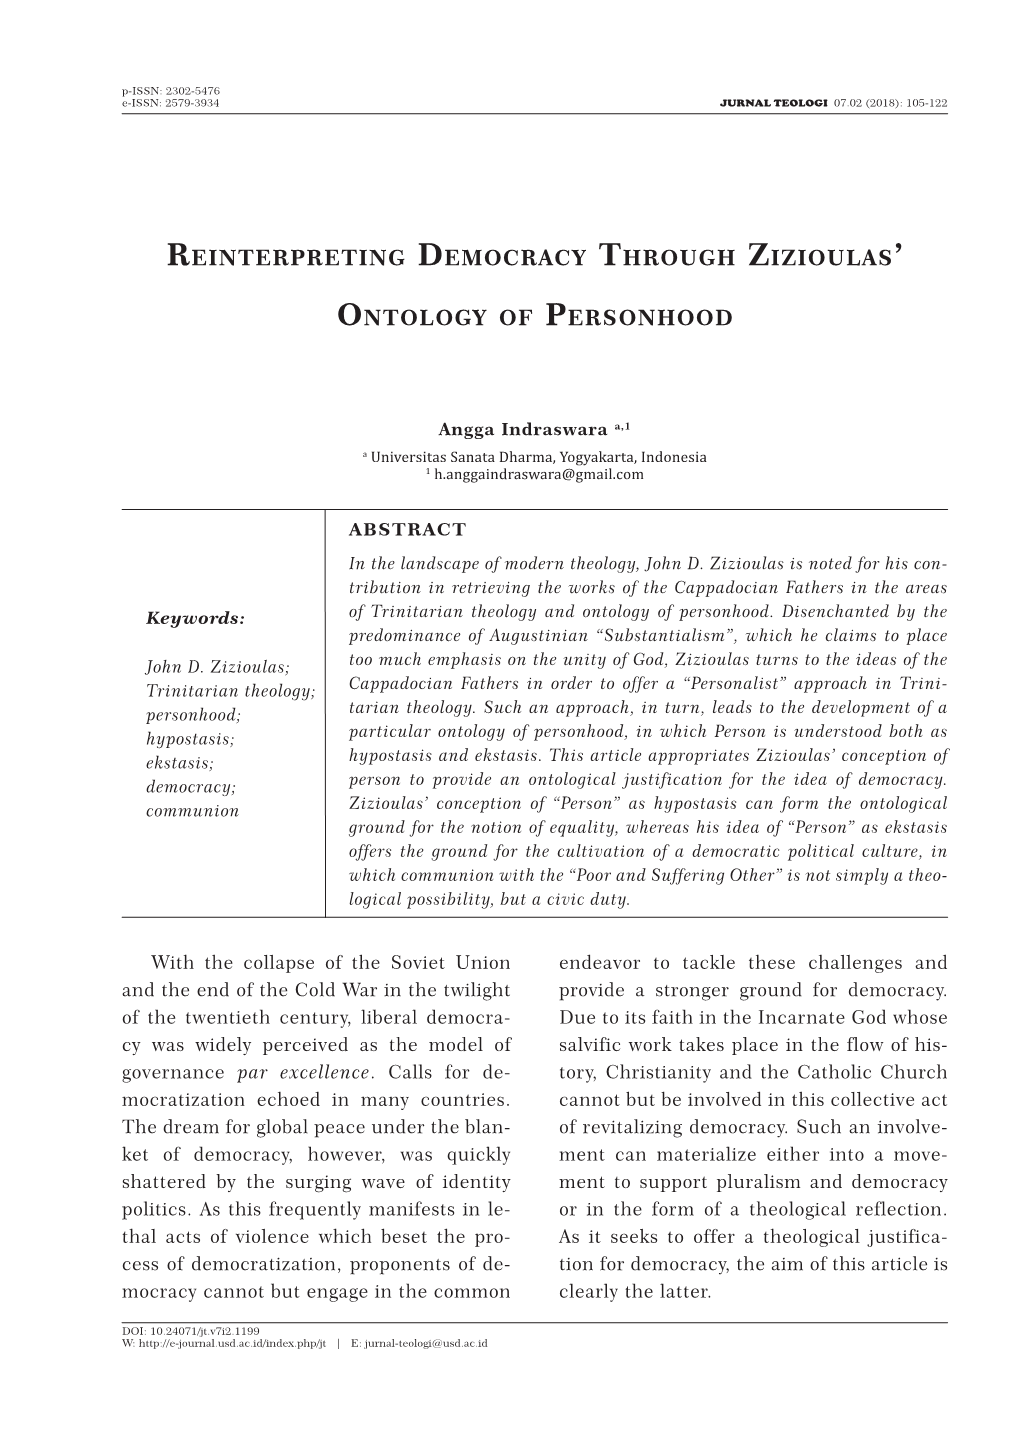 Reinterpreting Democracy Through Zizioulas' Ontology of Personhood